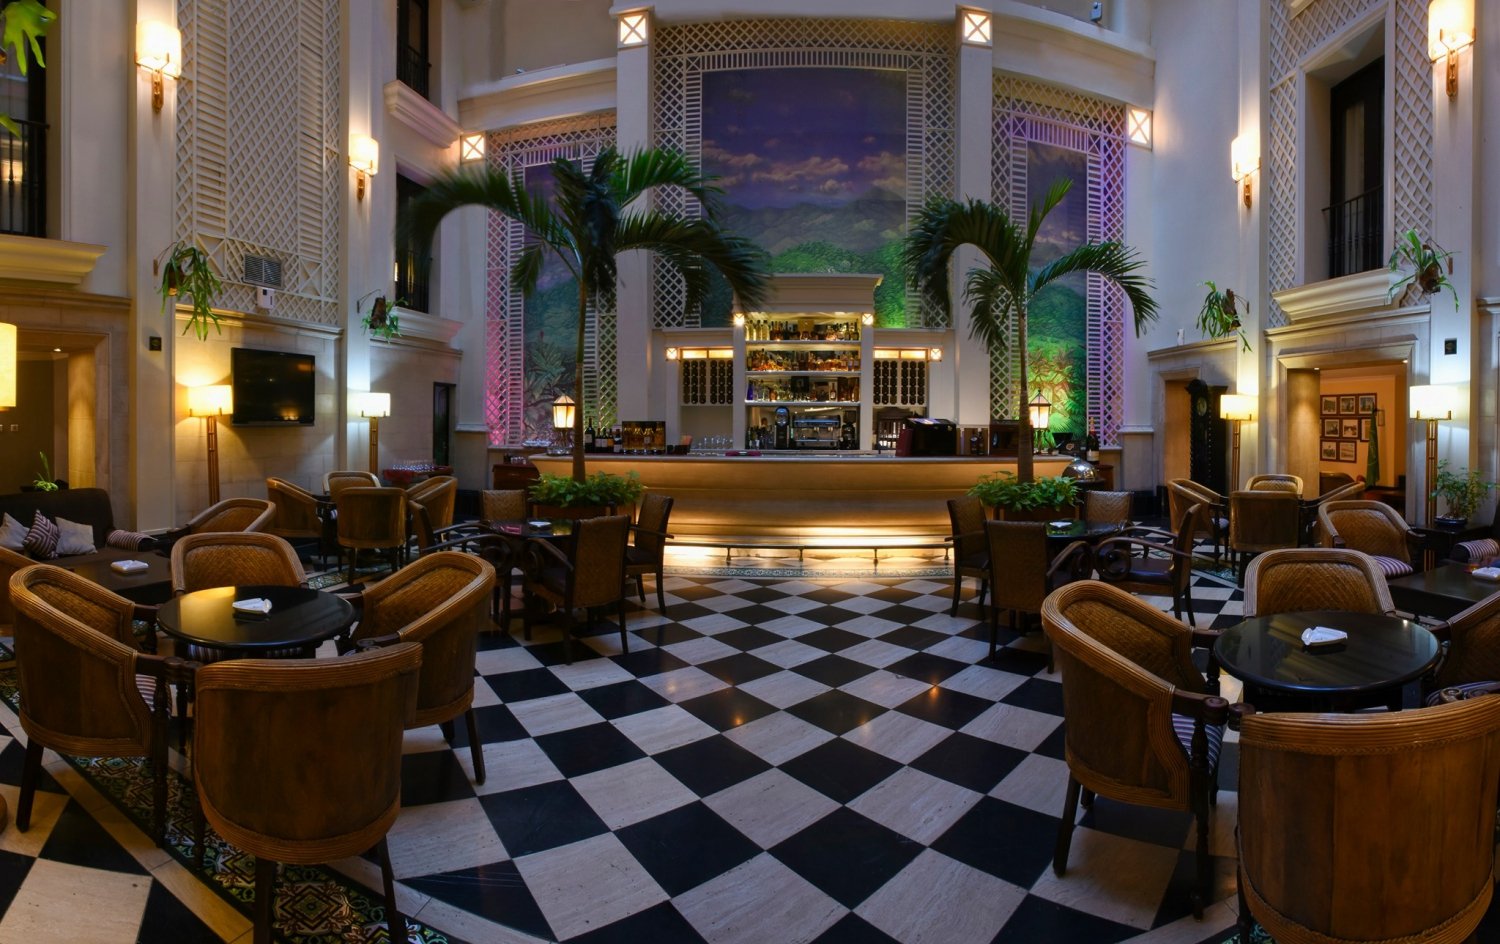 Saratoga Hotel